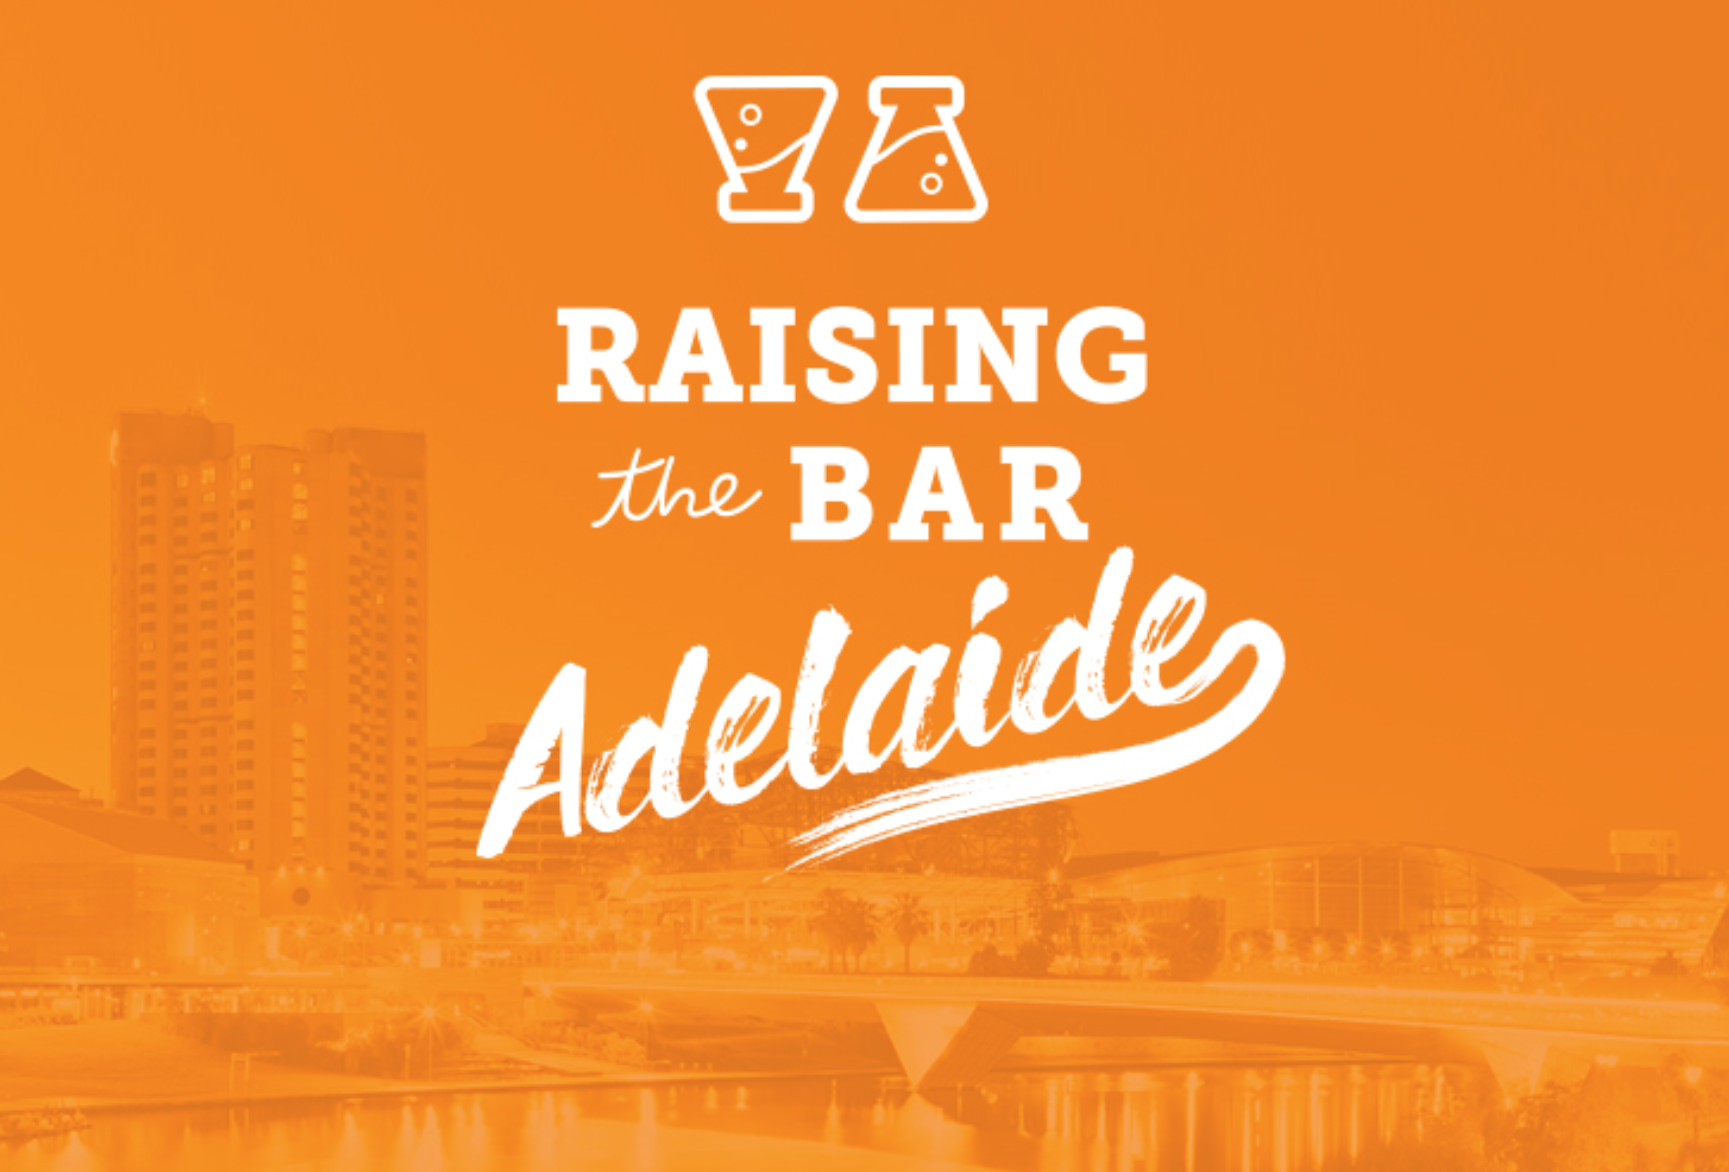 Raising the Bar Adelaide